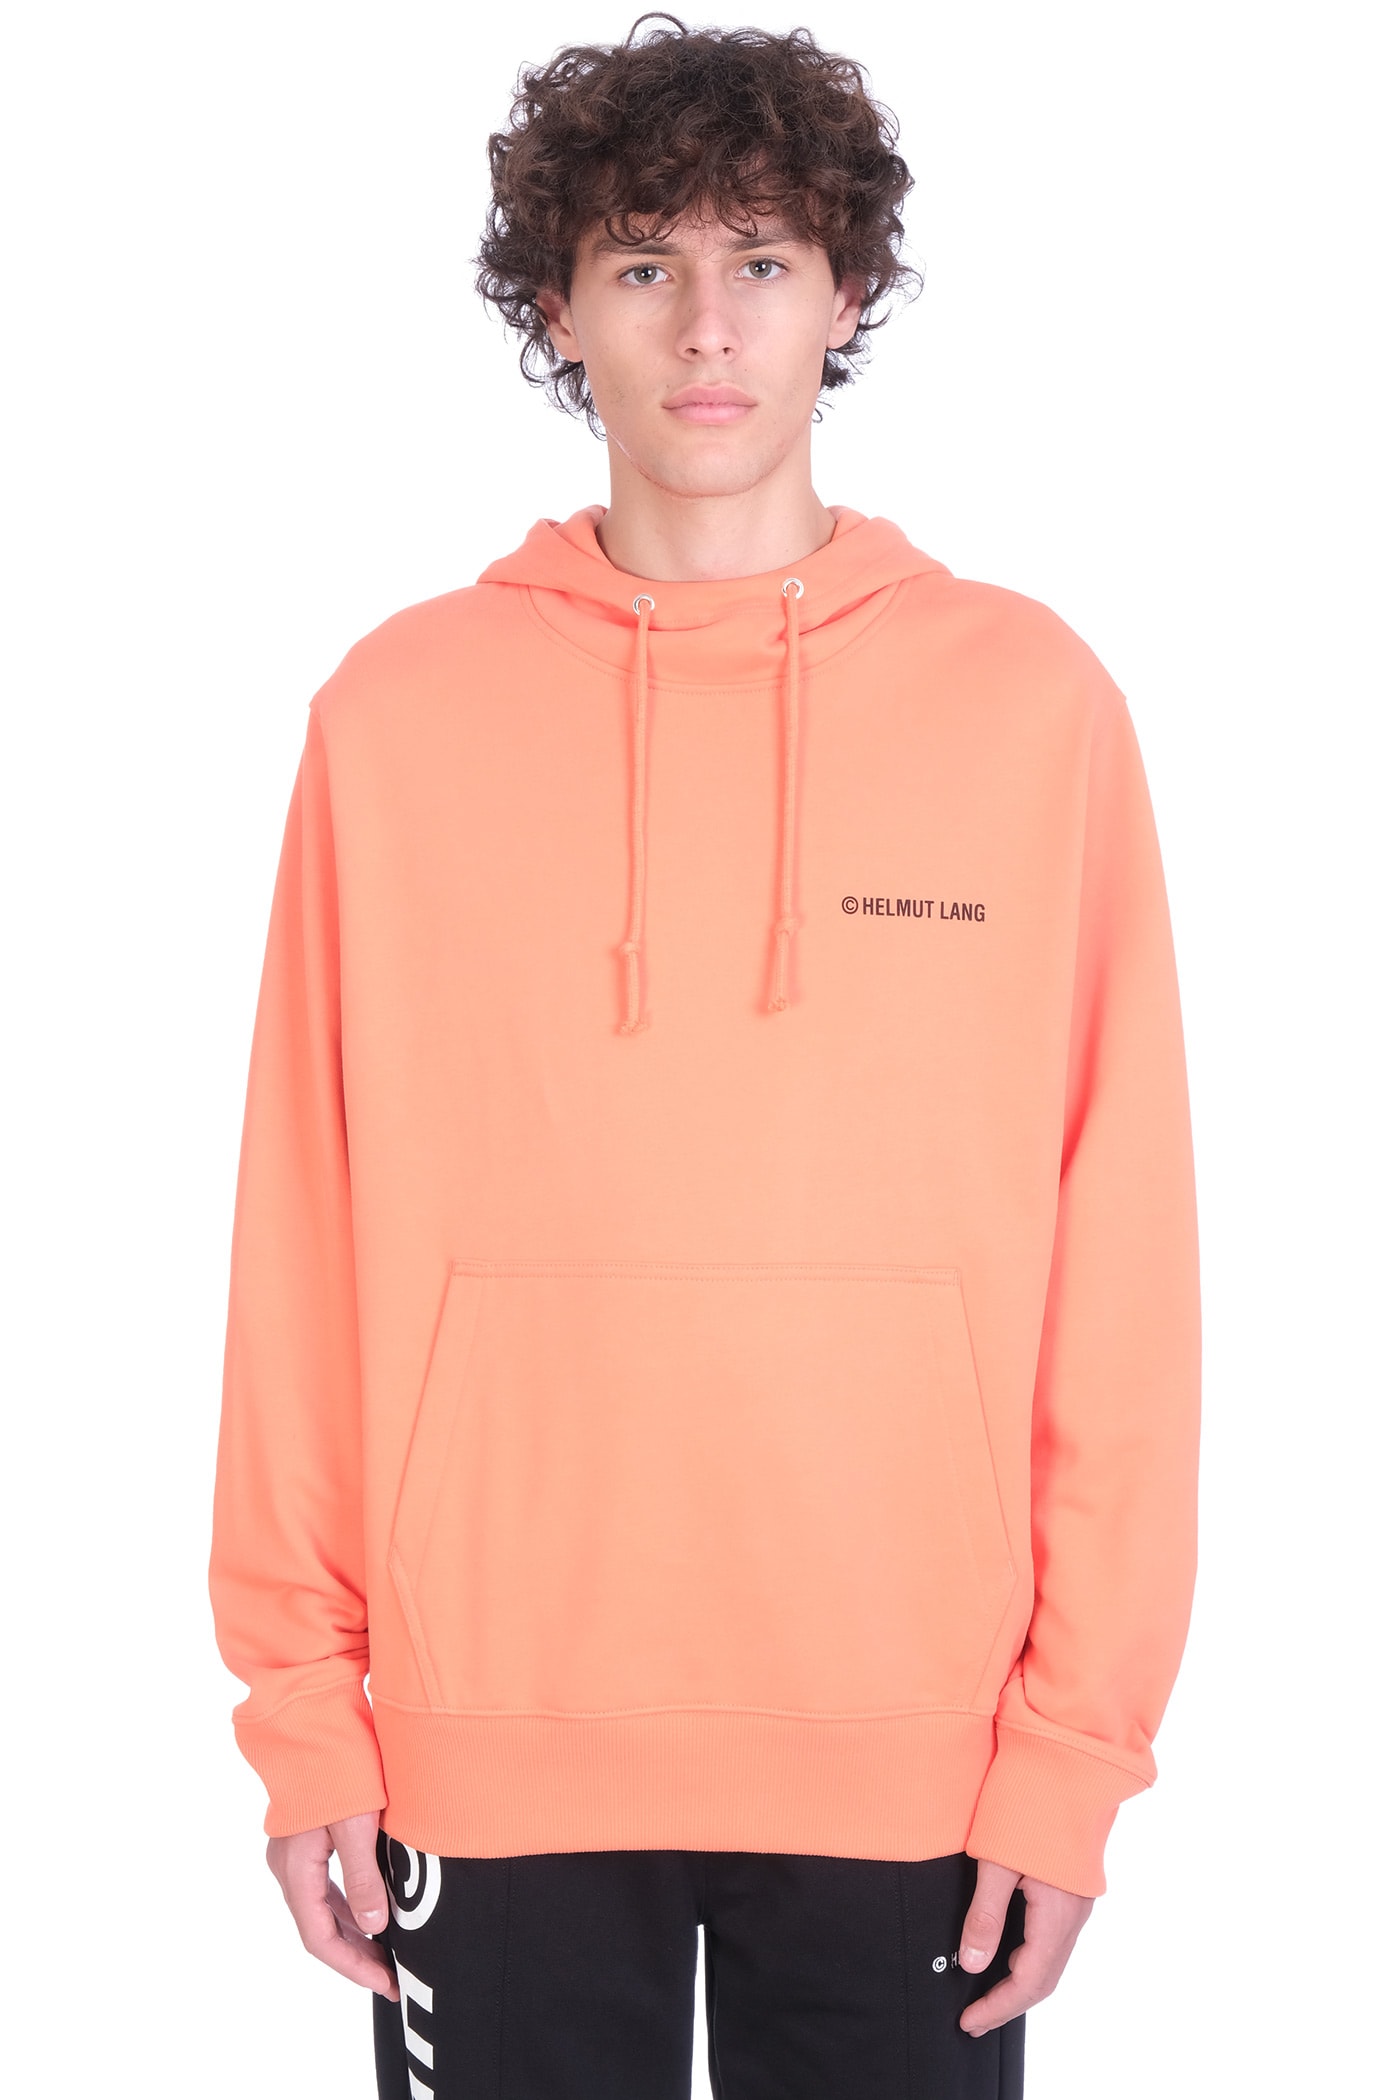 Helmut Lang Sweatshirt In Orange Cotton